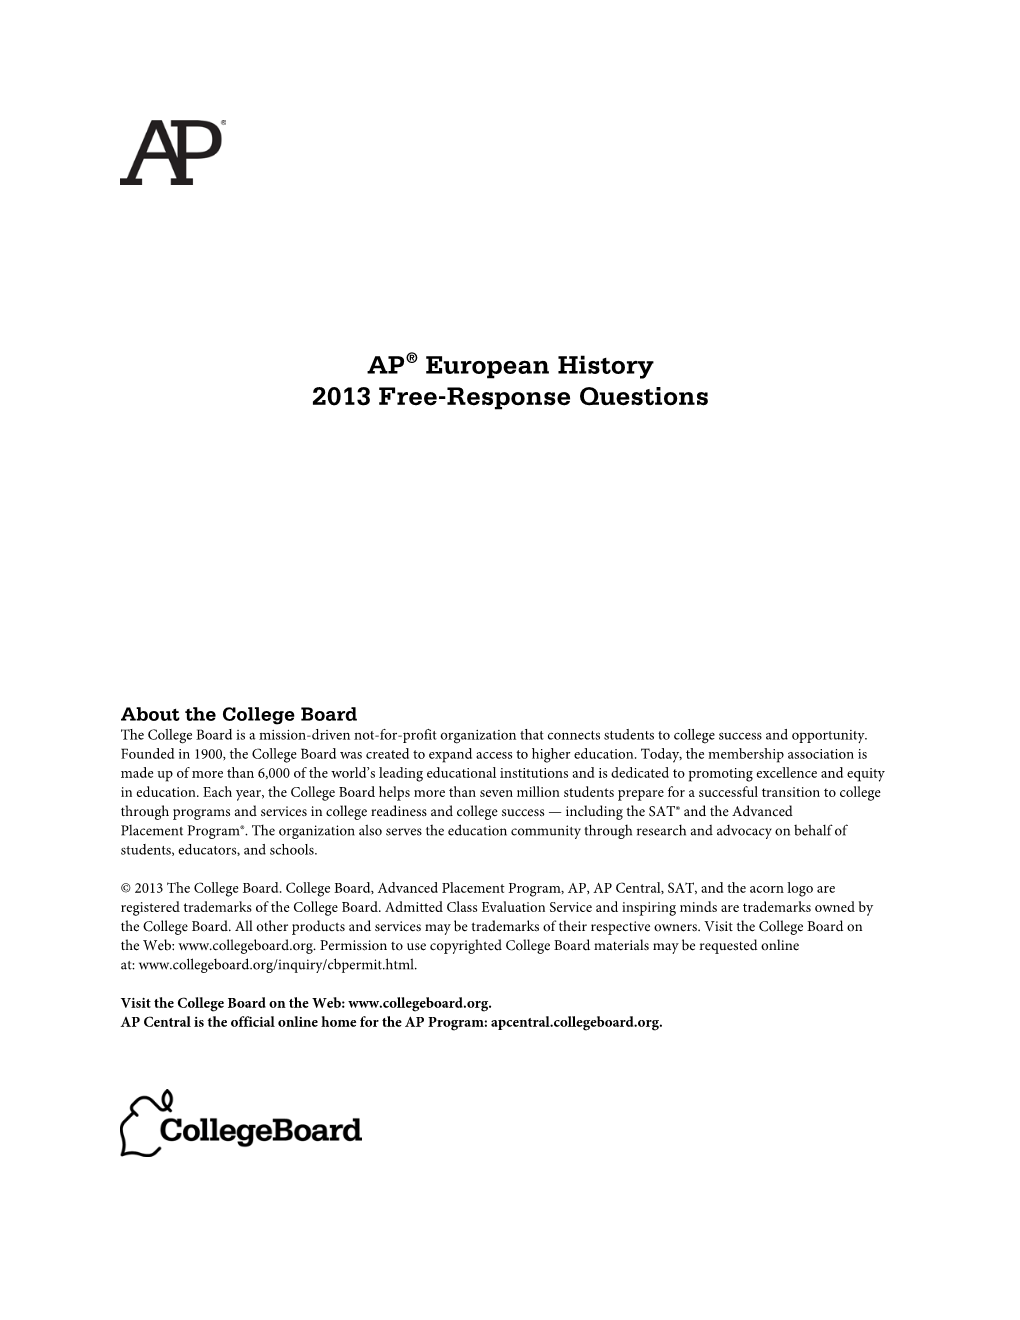 AP® European History 2013 Free-Response Questions